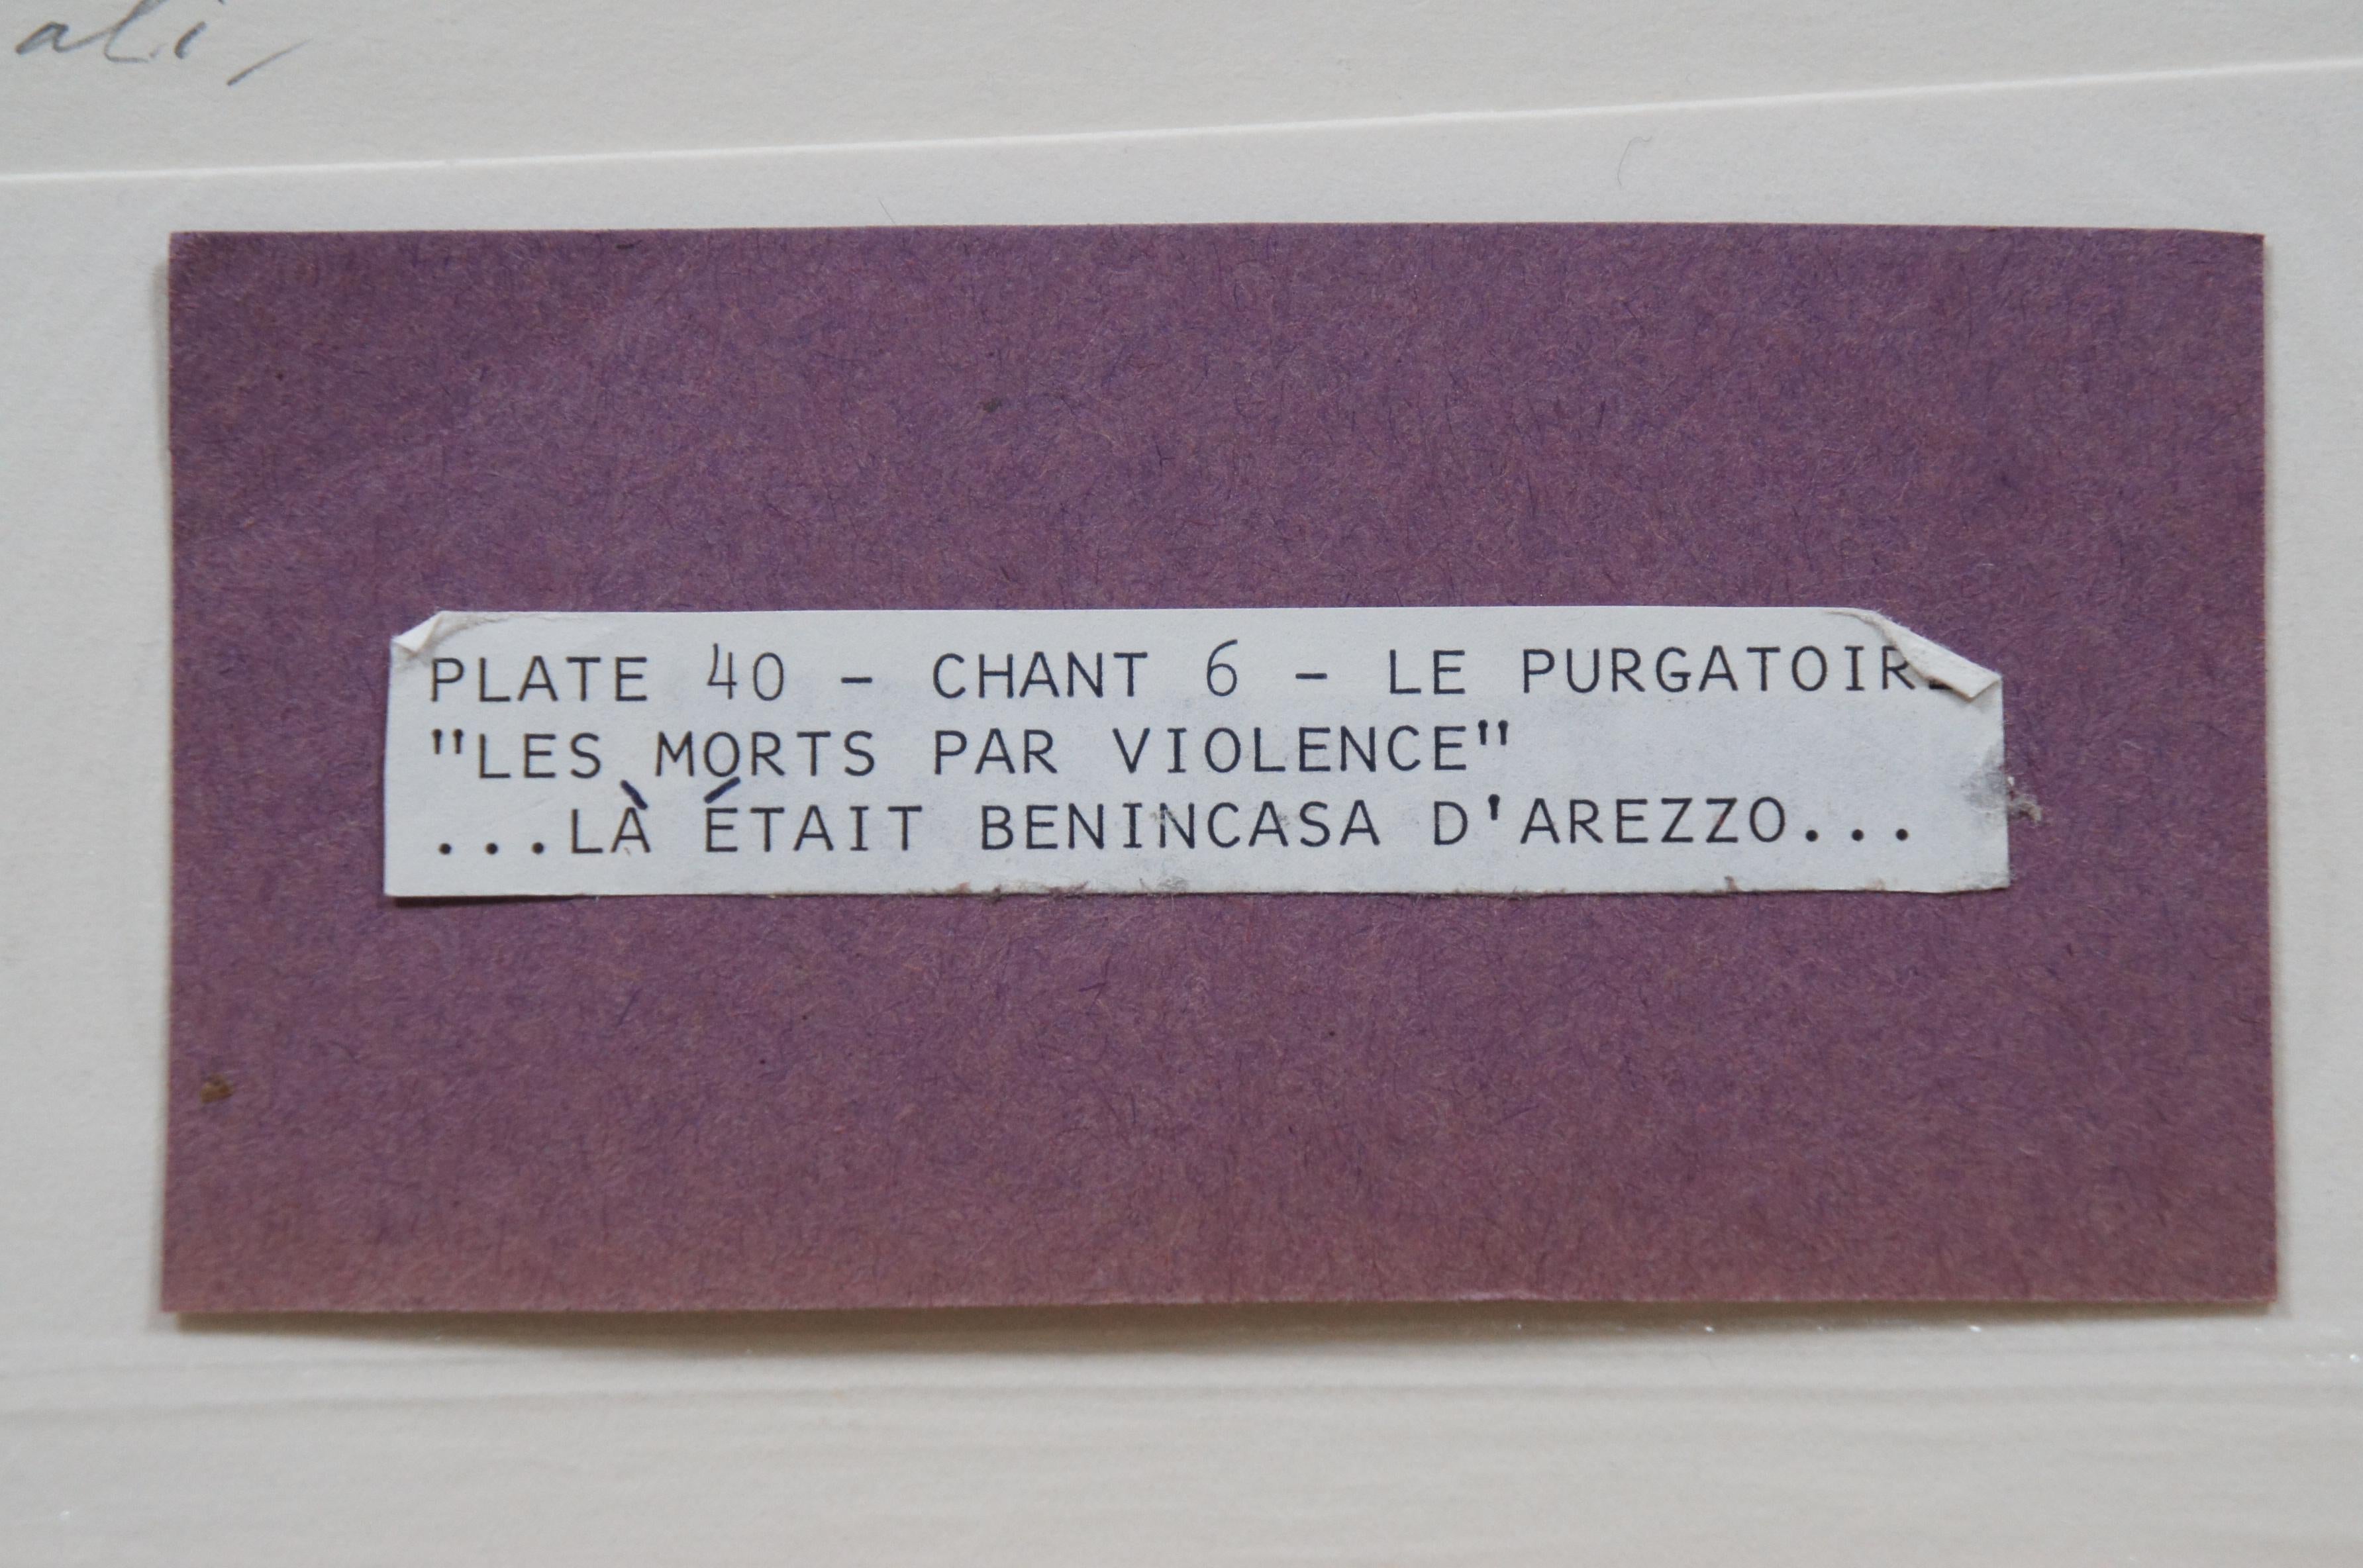 Paper Salvador Dali Les Morts par Violence Divine Comedy Woodcut Engraving Purgatory 6